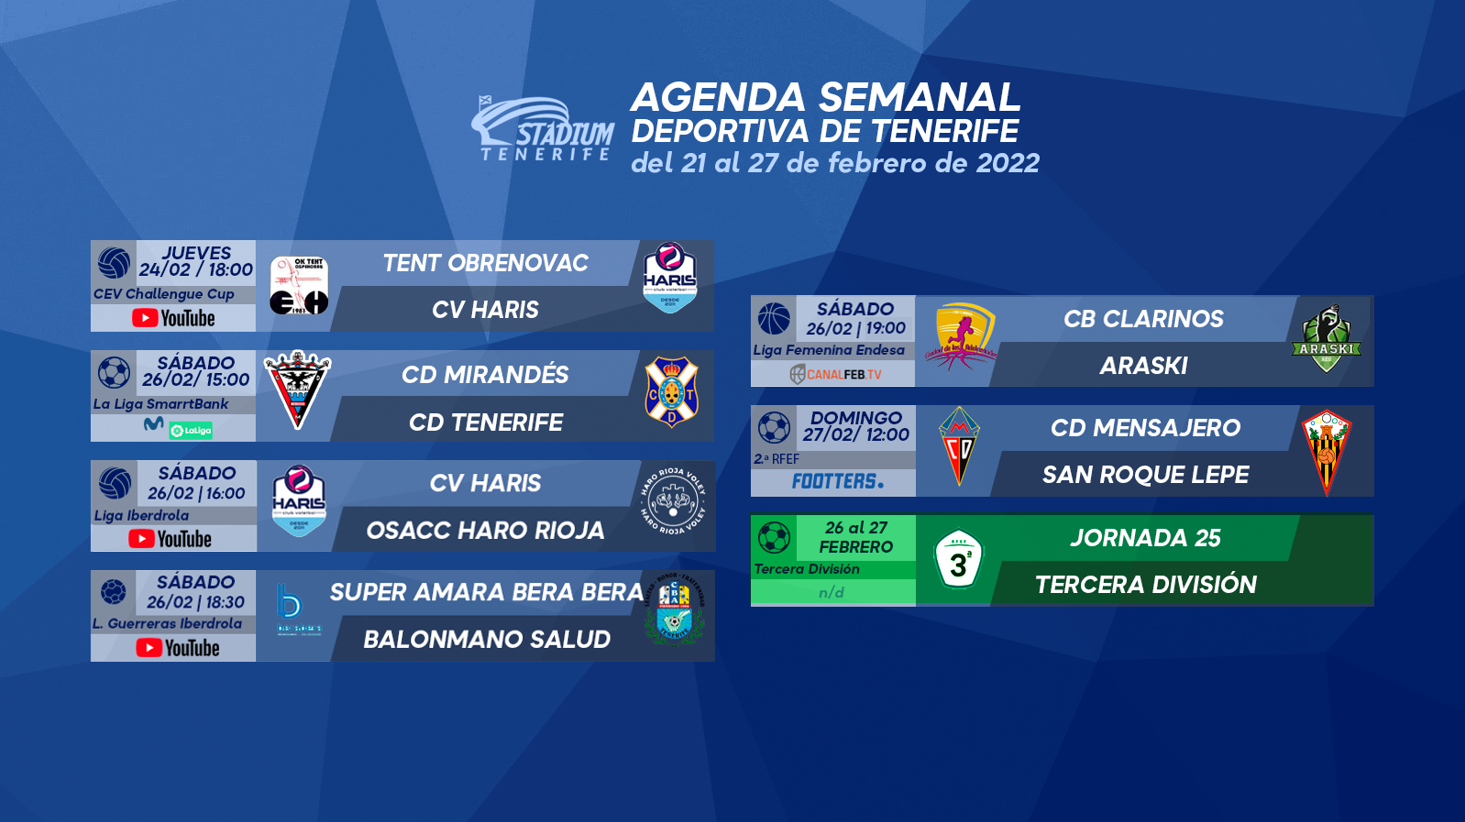 Agenda Semanal Deportiva de Tenerife (21 al 27 de febrero)